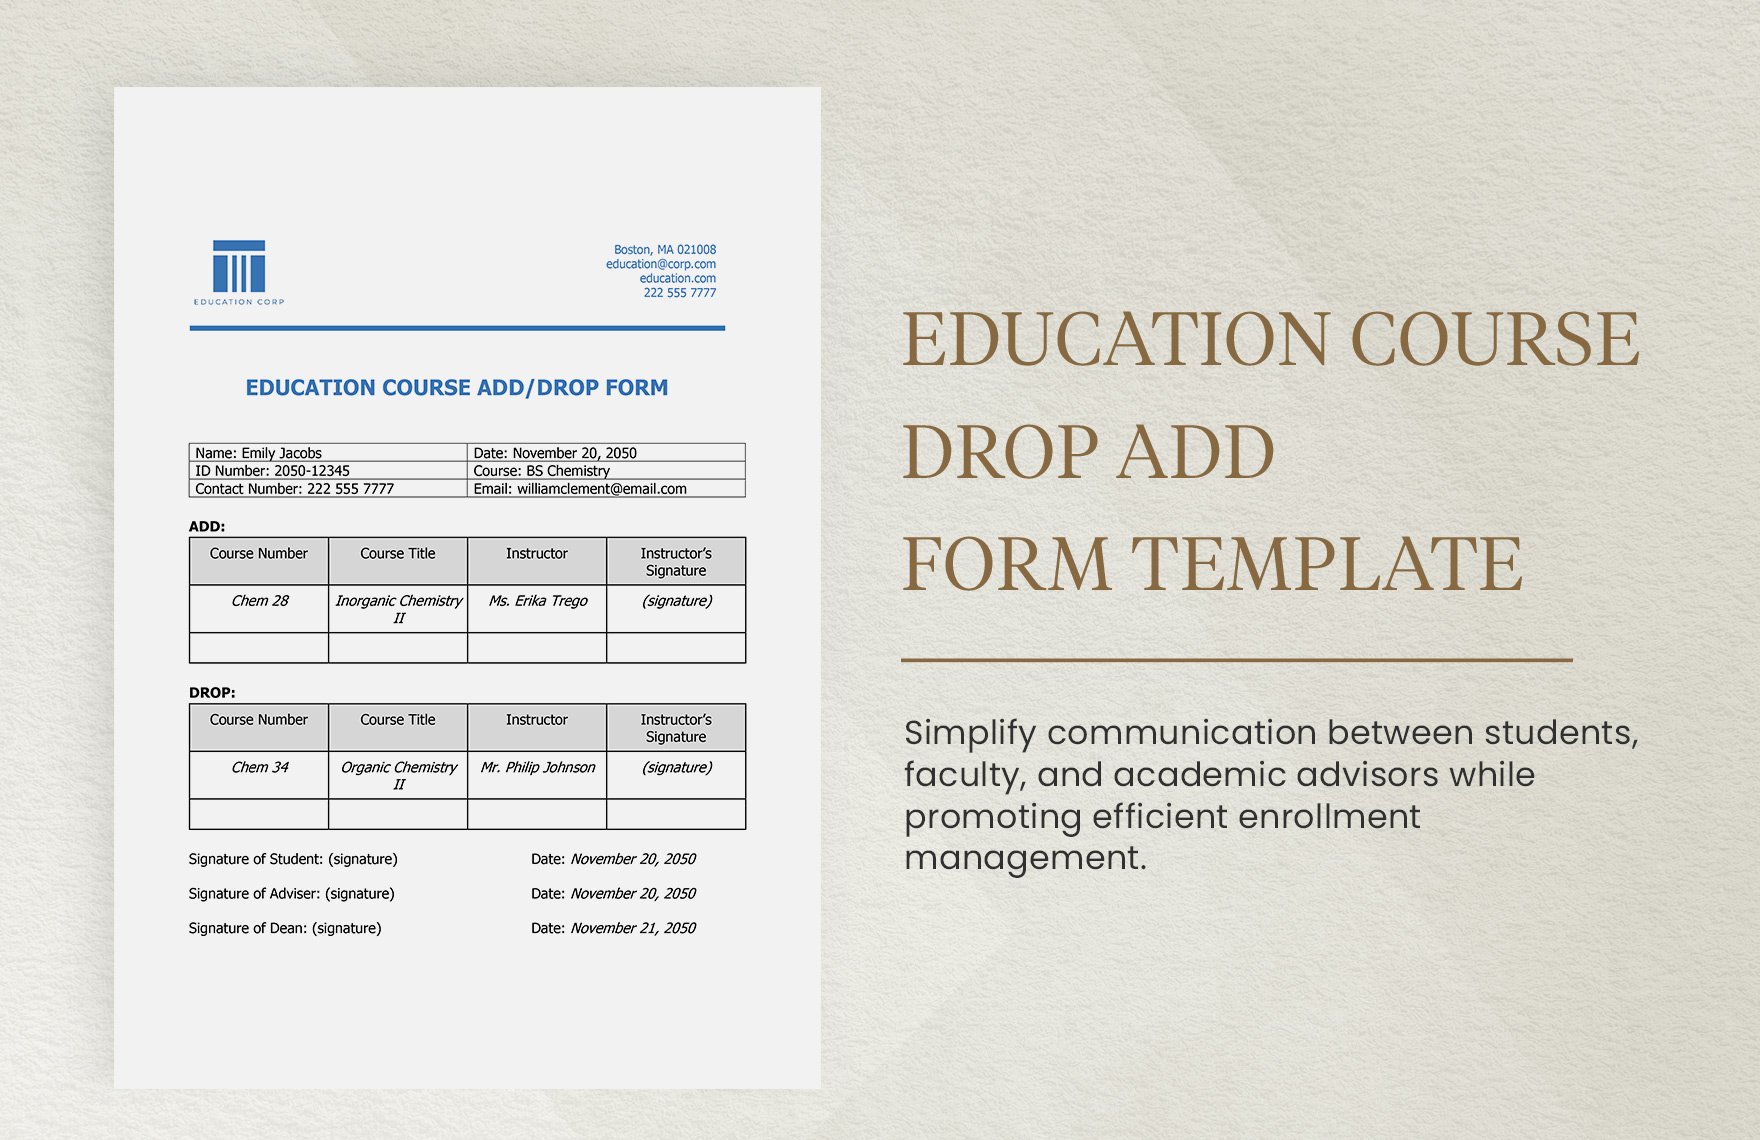 Education Course Drop/Add Form Template